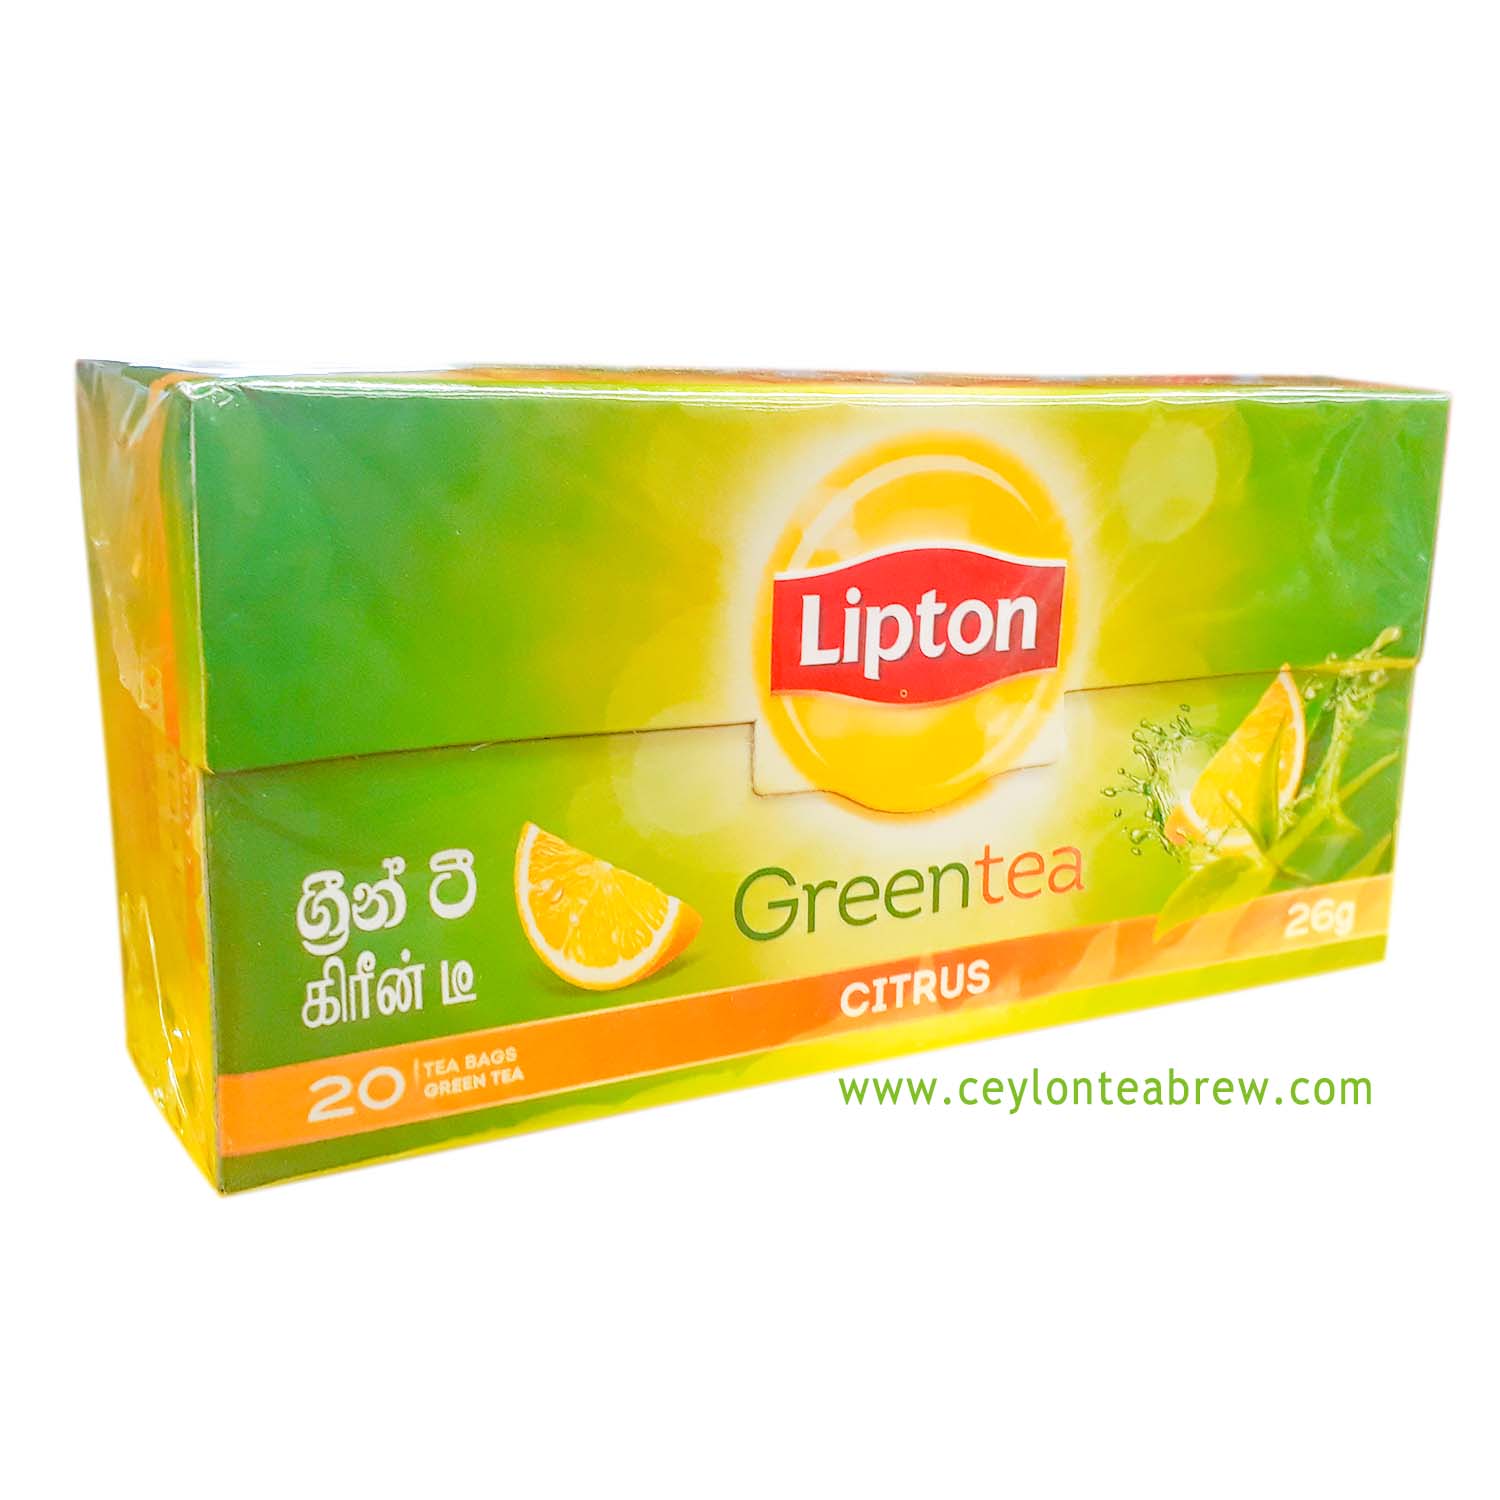 Lipton Ceylon tea Green tea with citus